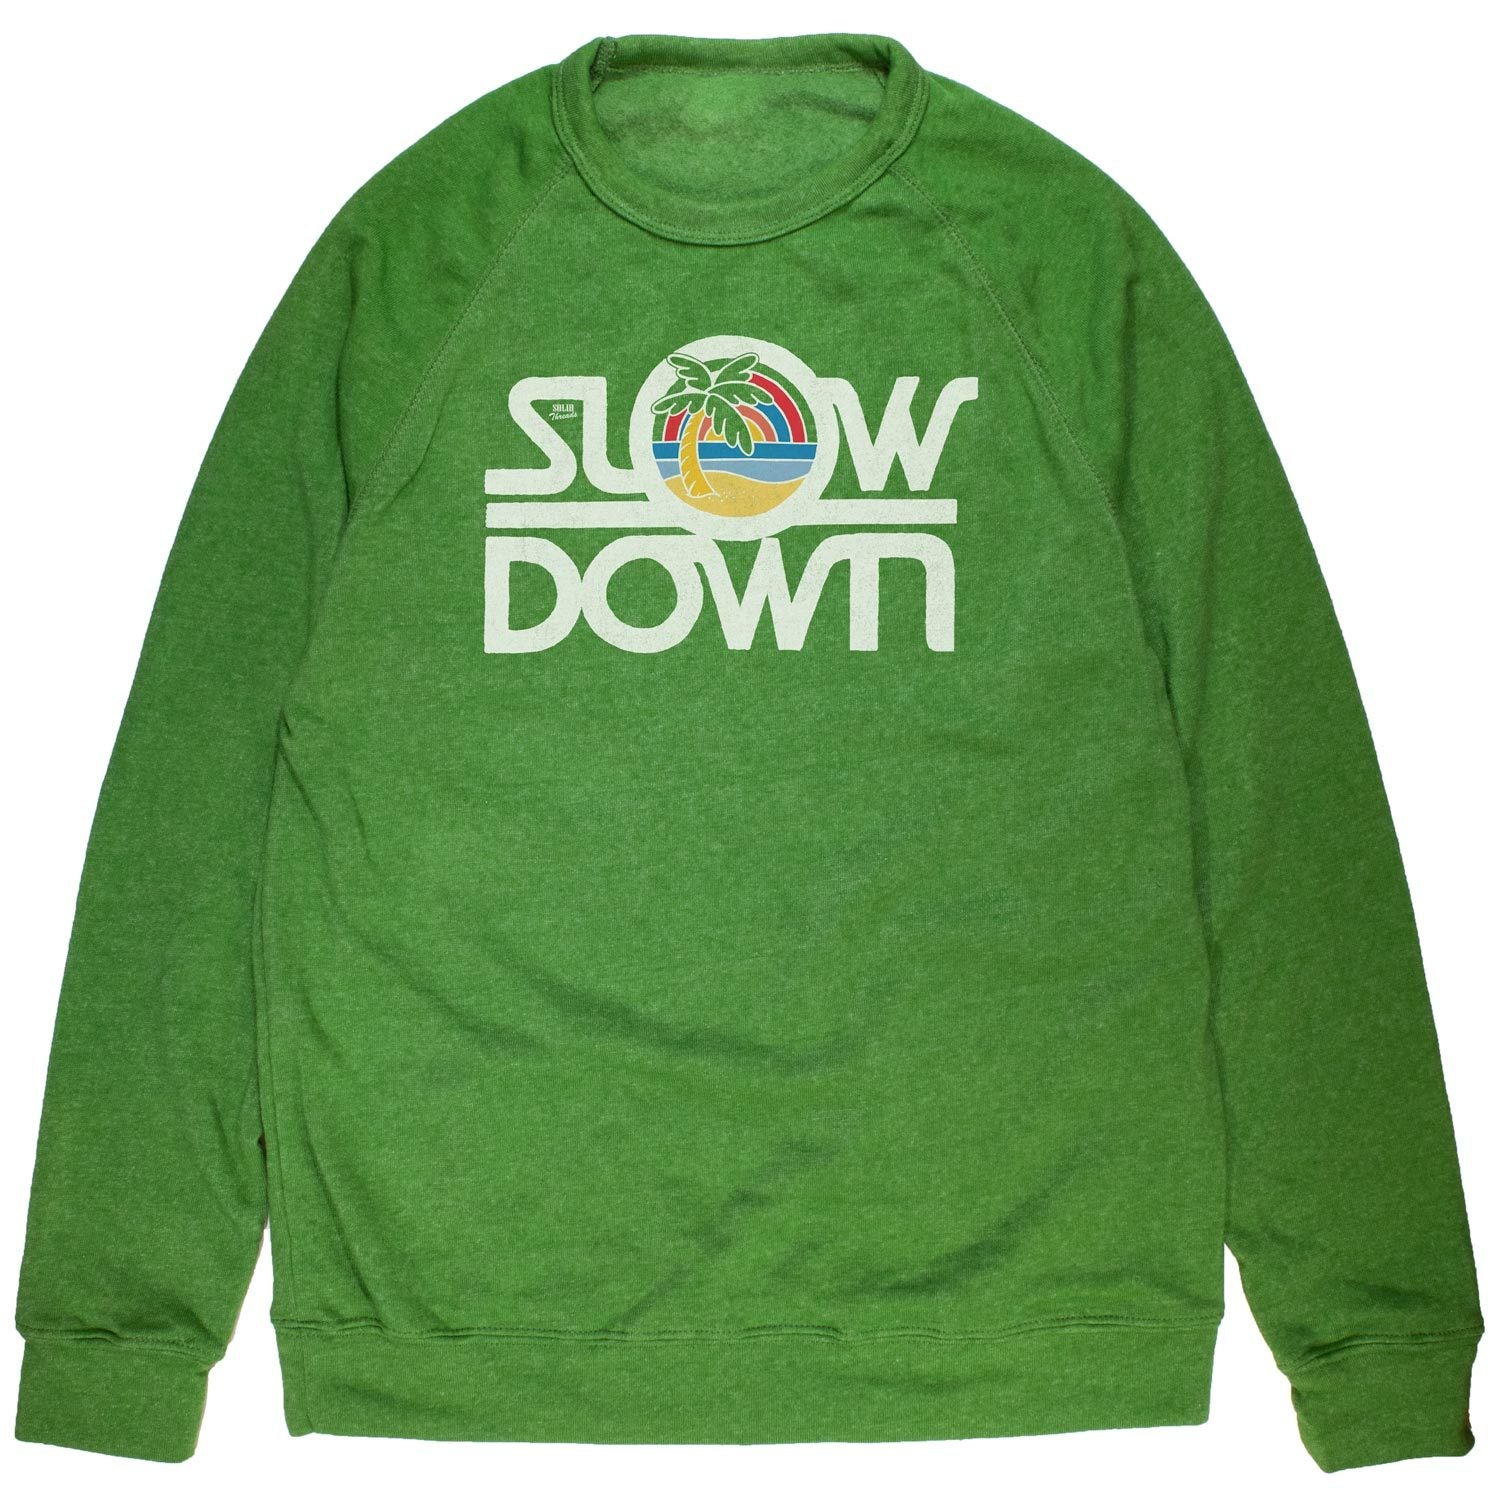 Slow Down Vintage Inspired Fleece Crewneck Sweatshirt with retro beach graphic | Solid Threads